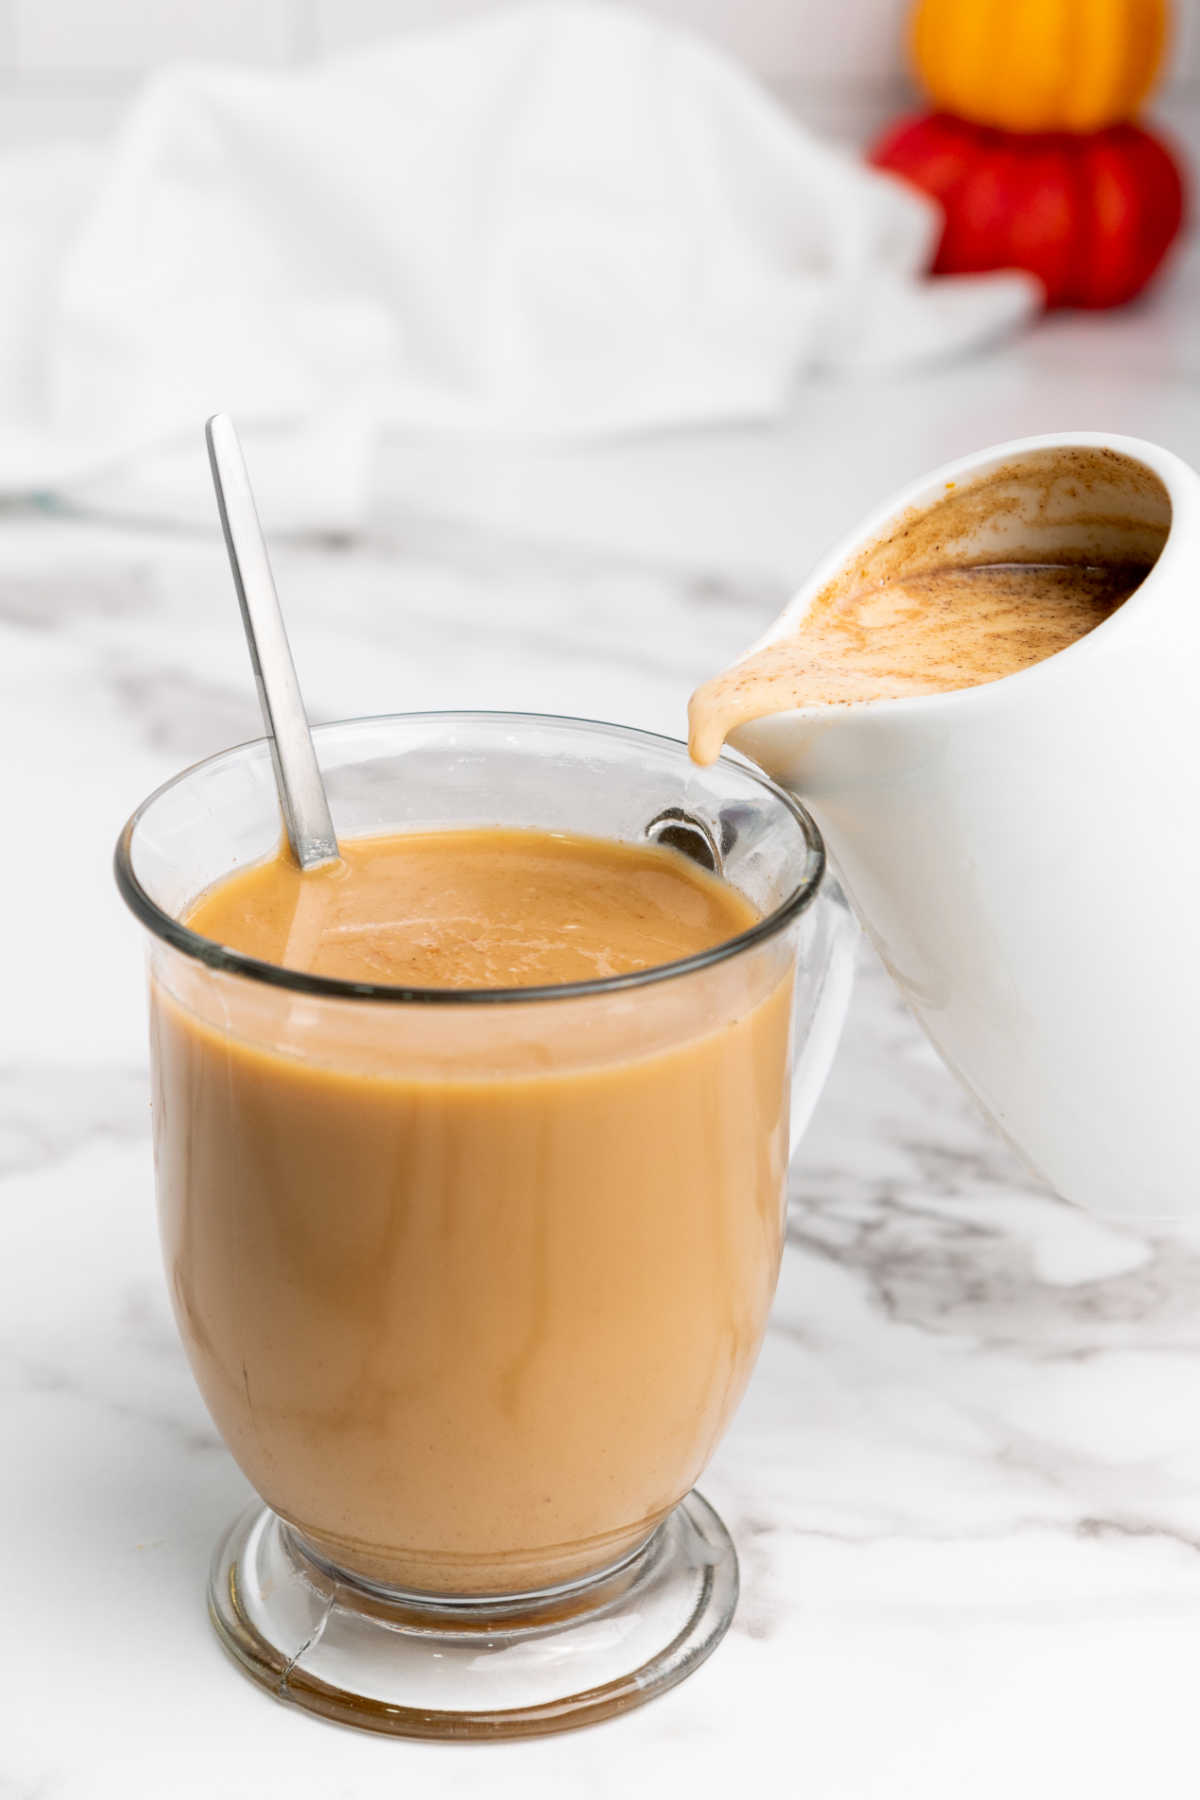 Pouring pumpkin spice creamer into a mug of coffee.